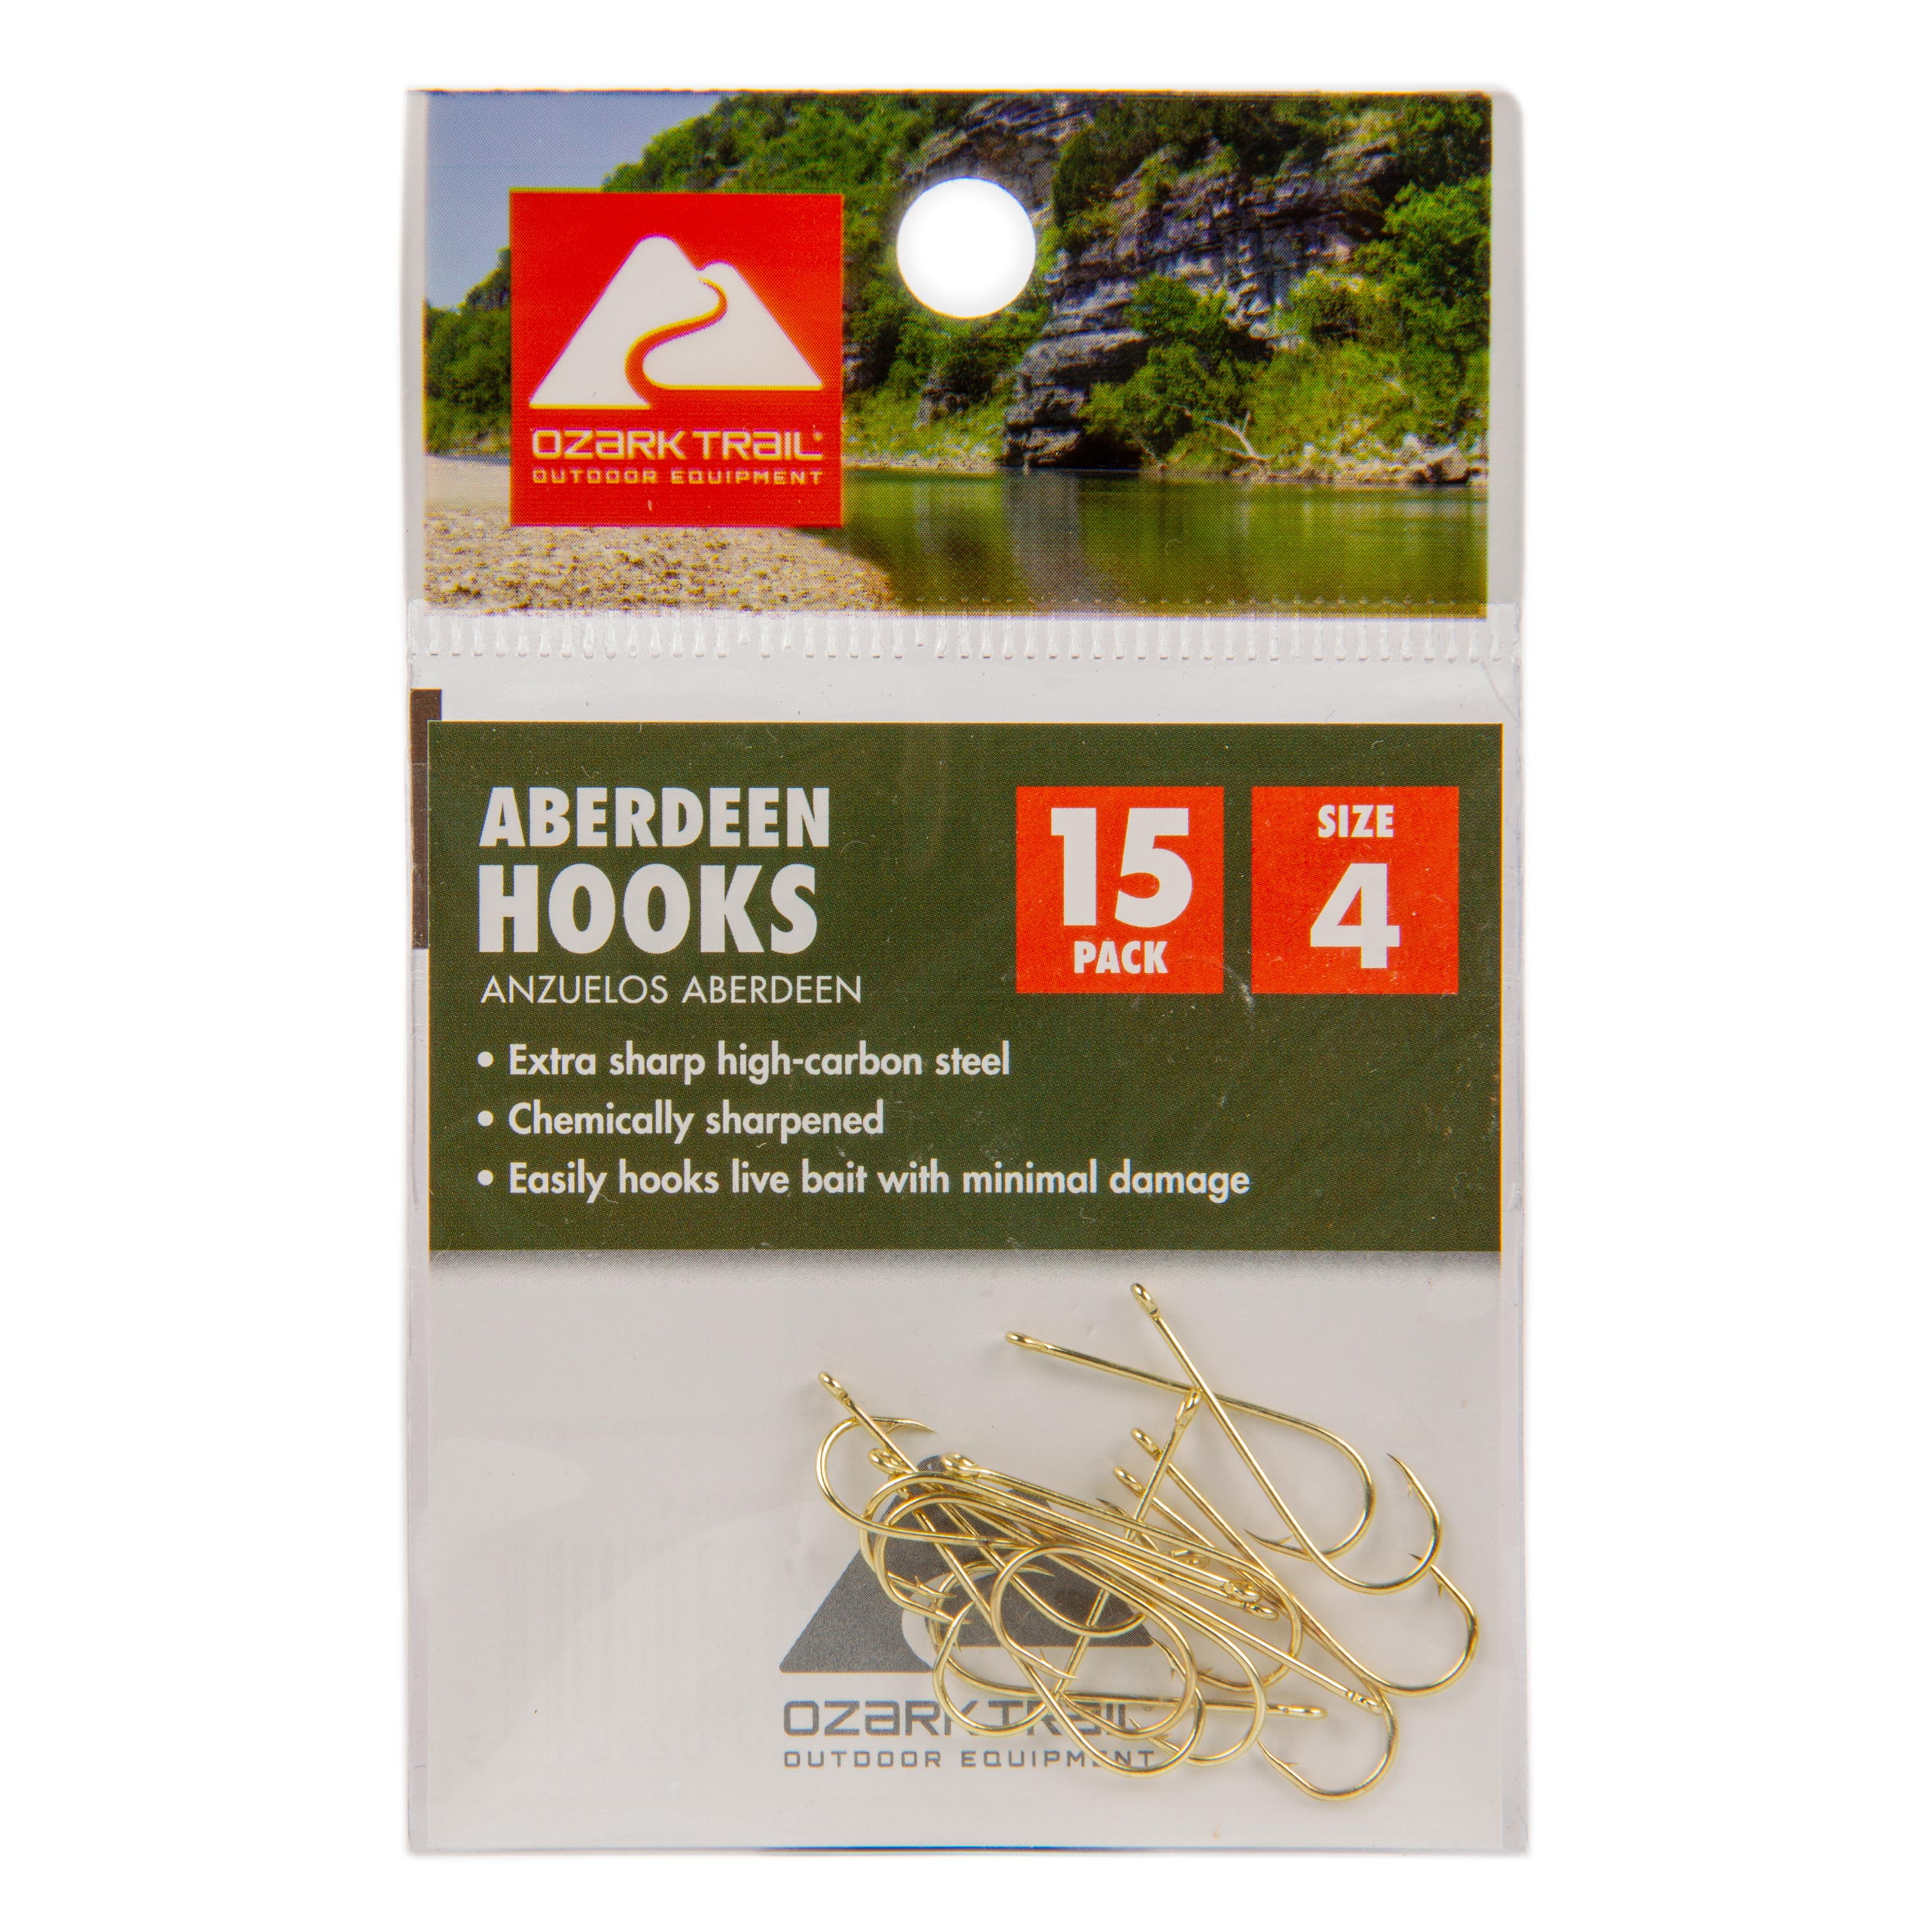 Ozark Trail Gold Aberdeen Light Wire Fishing Hooks Size 6 - 15 Pack 